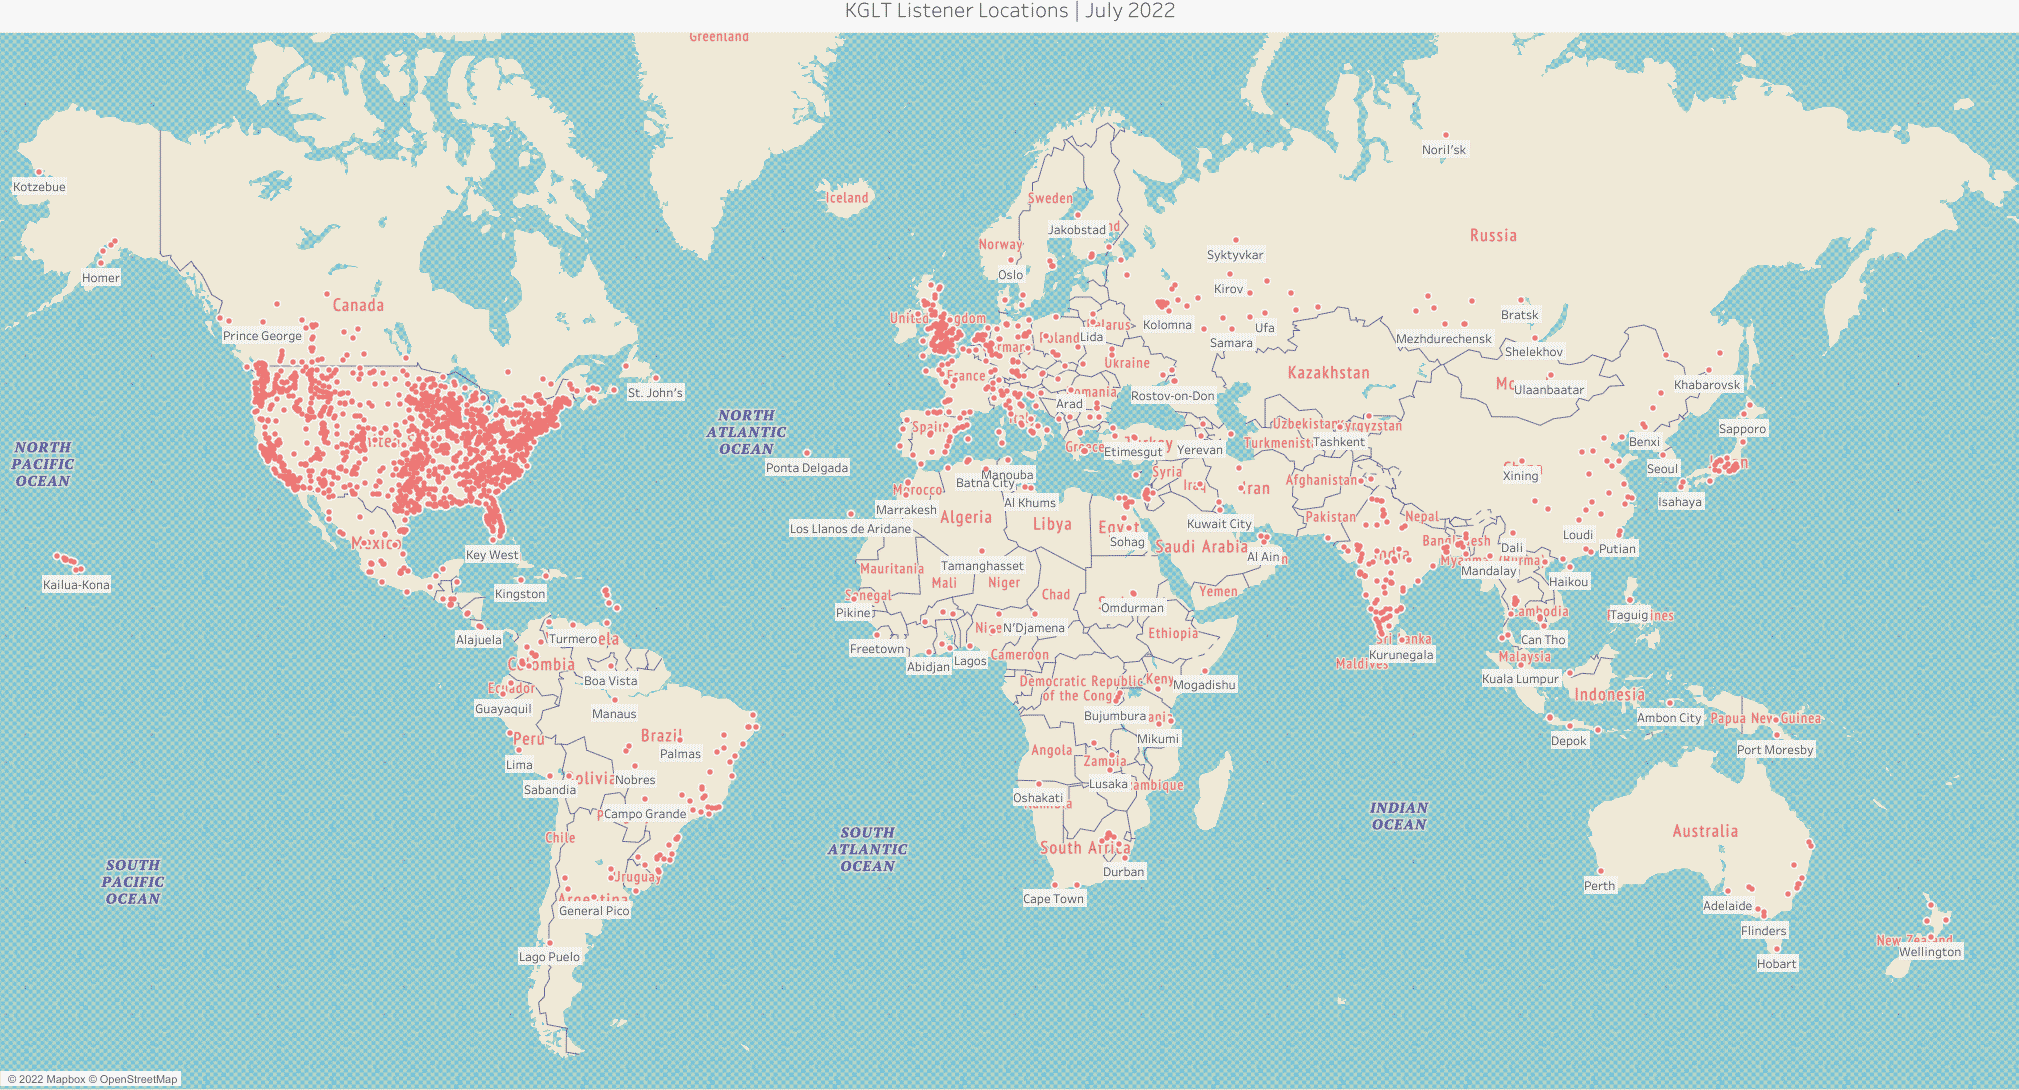 Map of online listener locations around the world